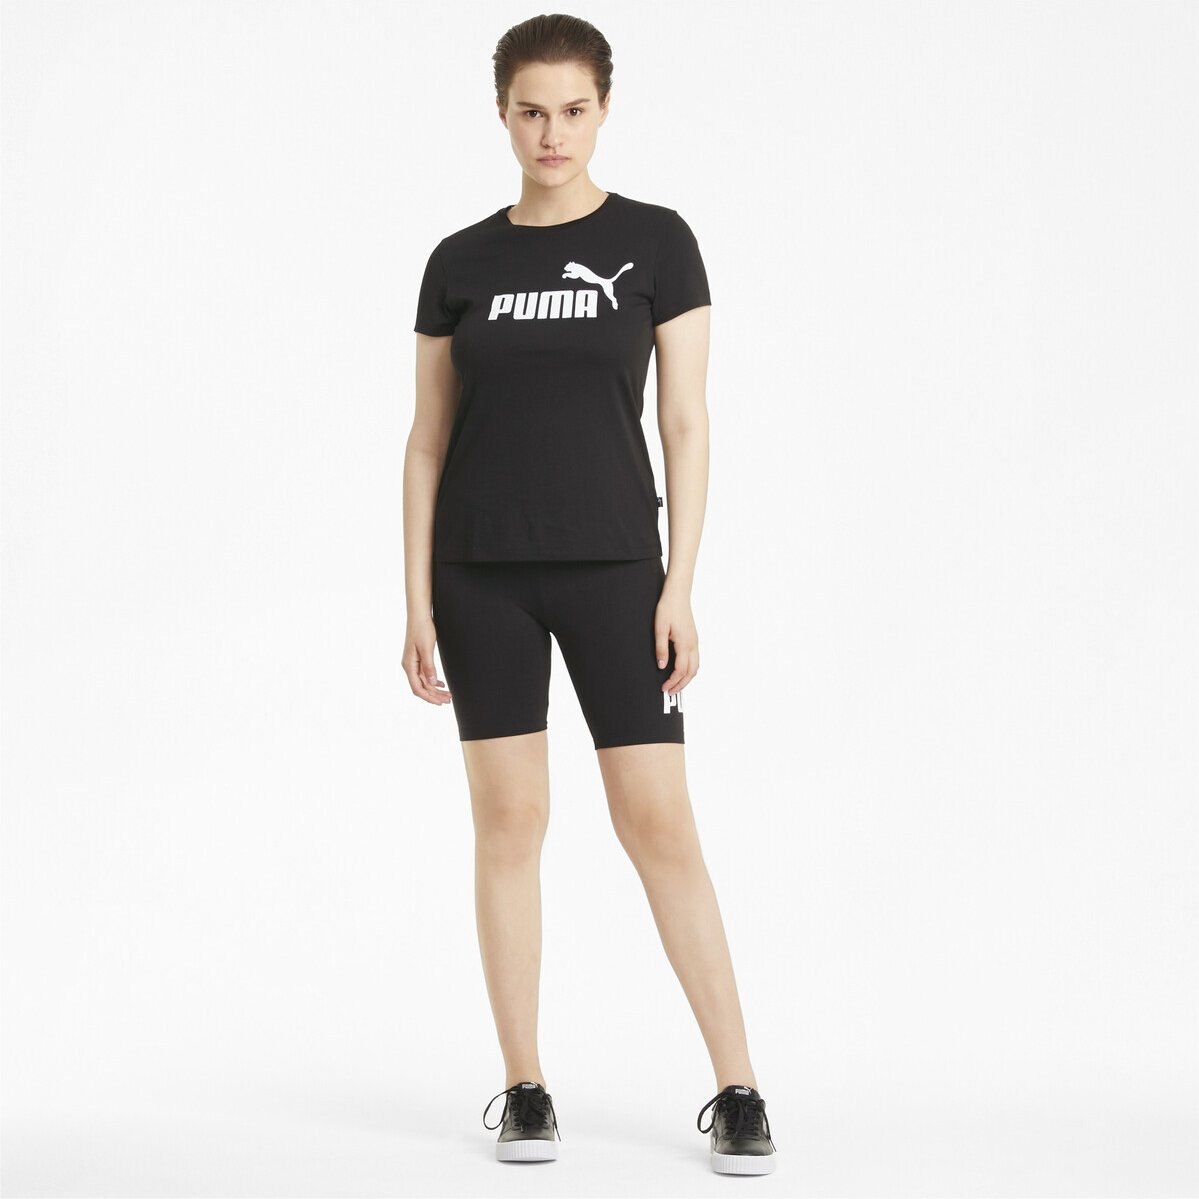 Mujer - Puma Ropa running y fitness